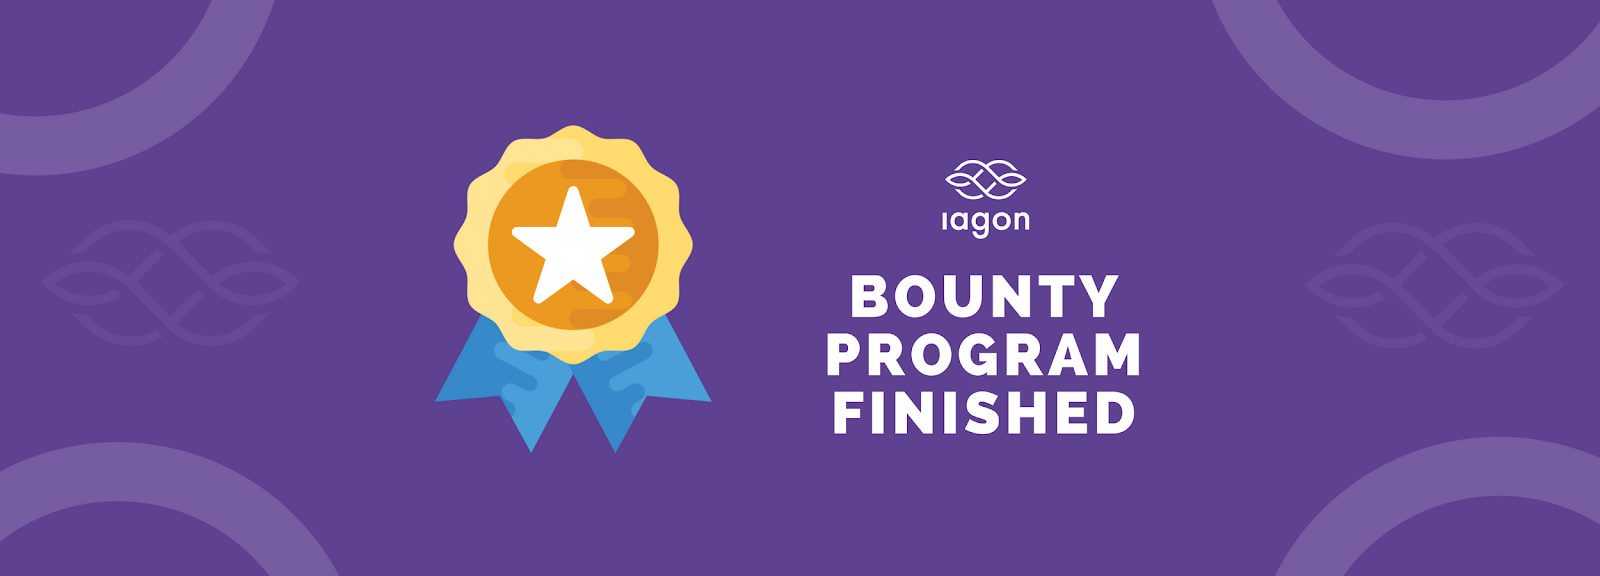 IAGON’s Bounty Program